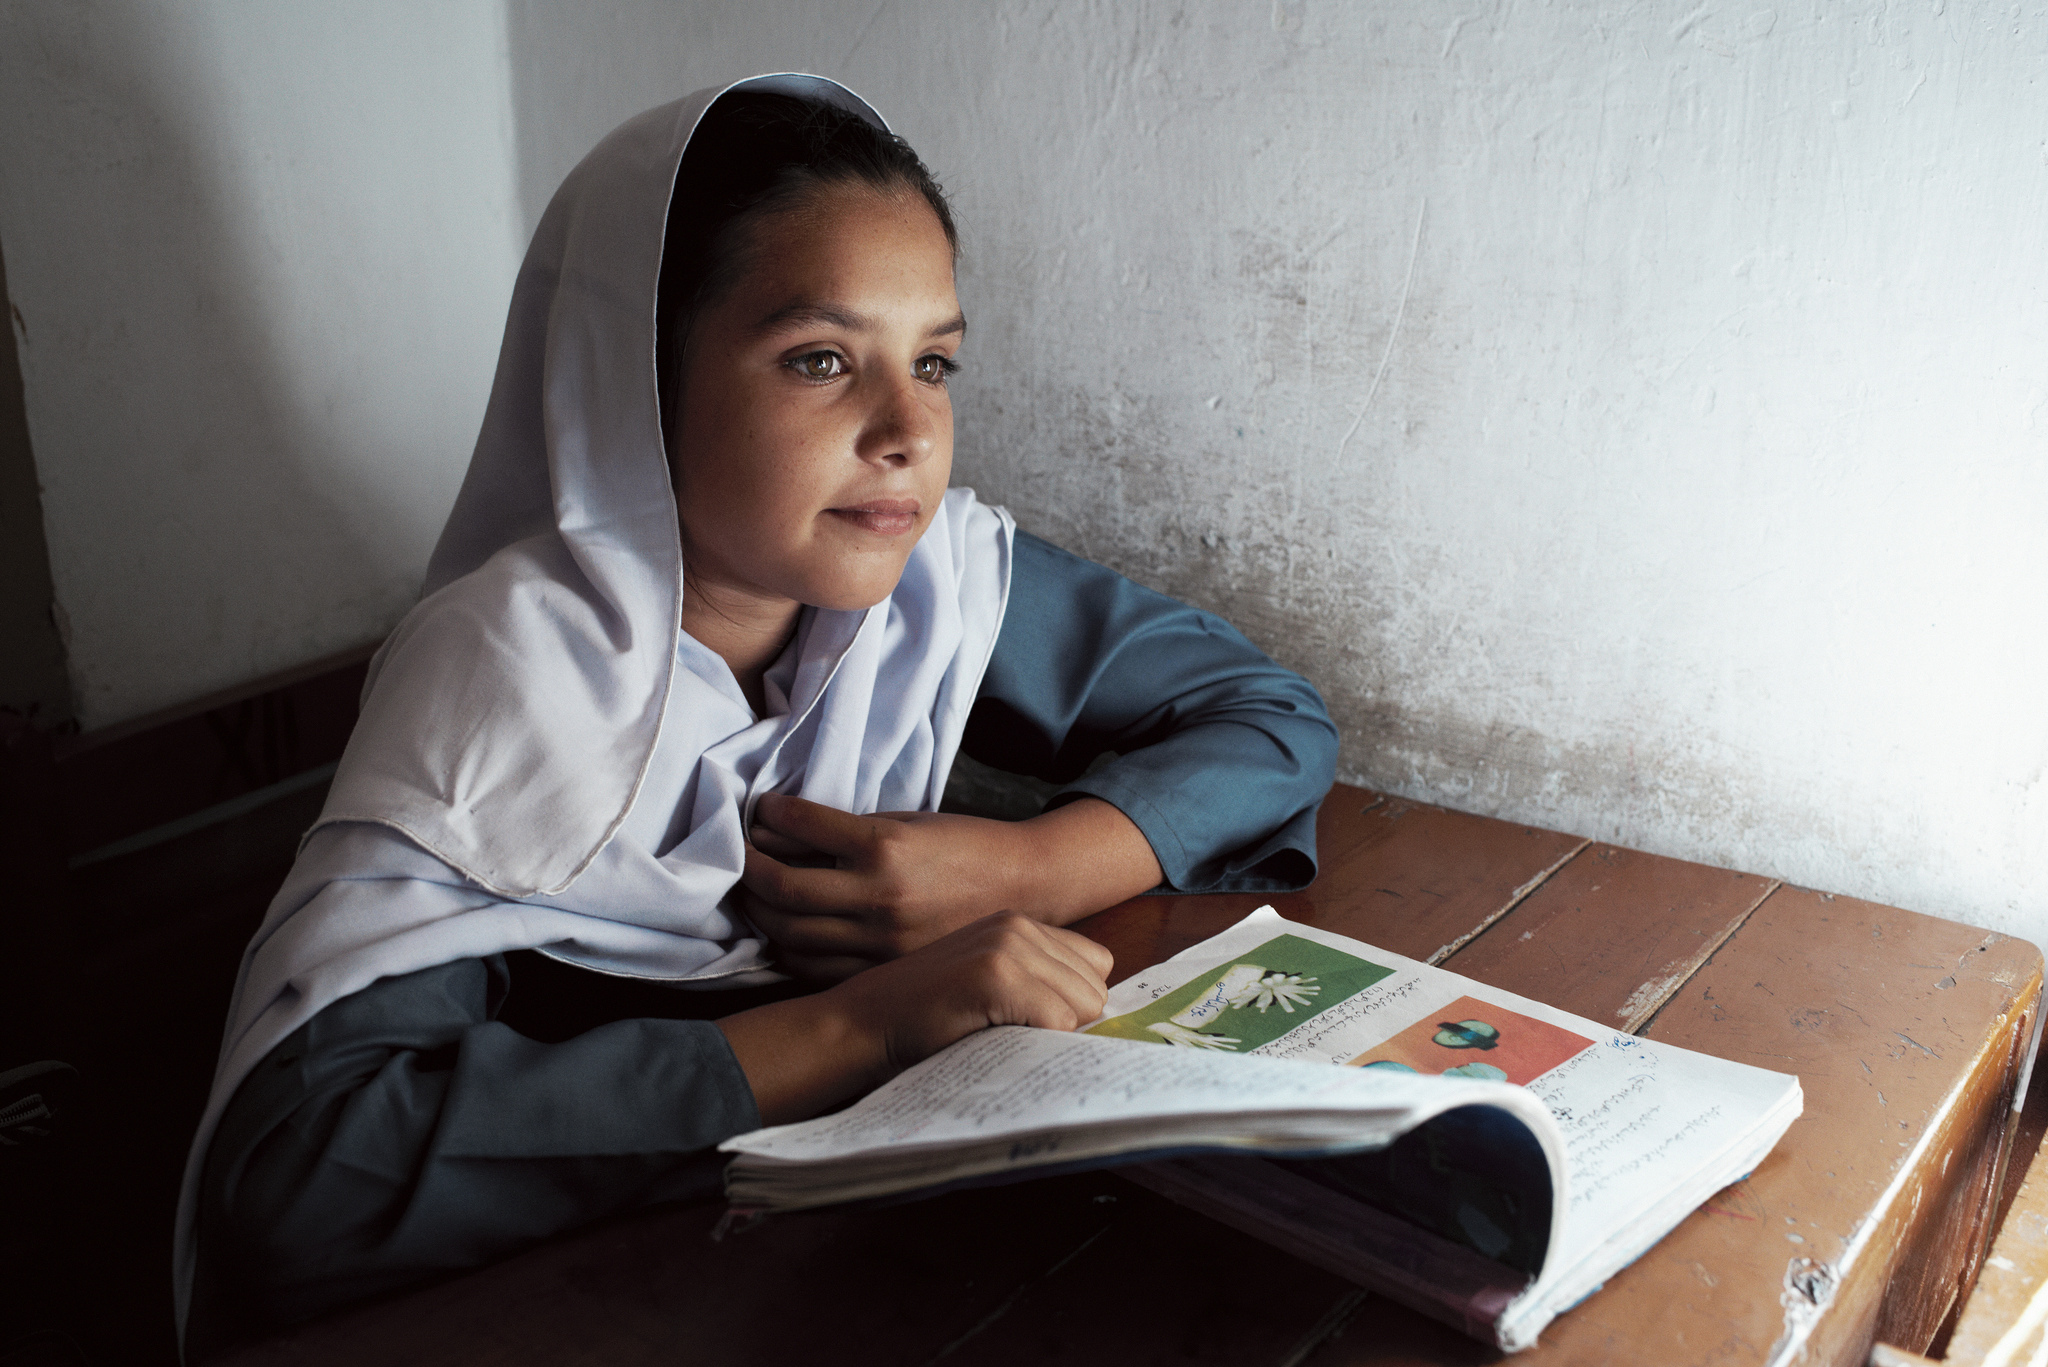 Year 6 student Rimsha Farooq reads during class at Khinger Khurd school, Punjab Province, Pakistan. Sept. 2012. Credit STARS/Kristian Buus